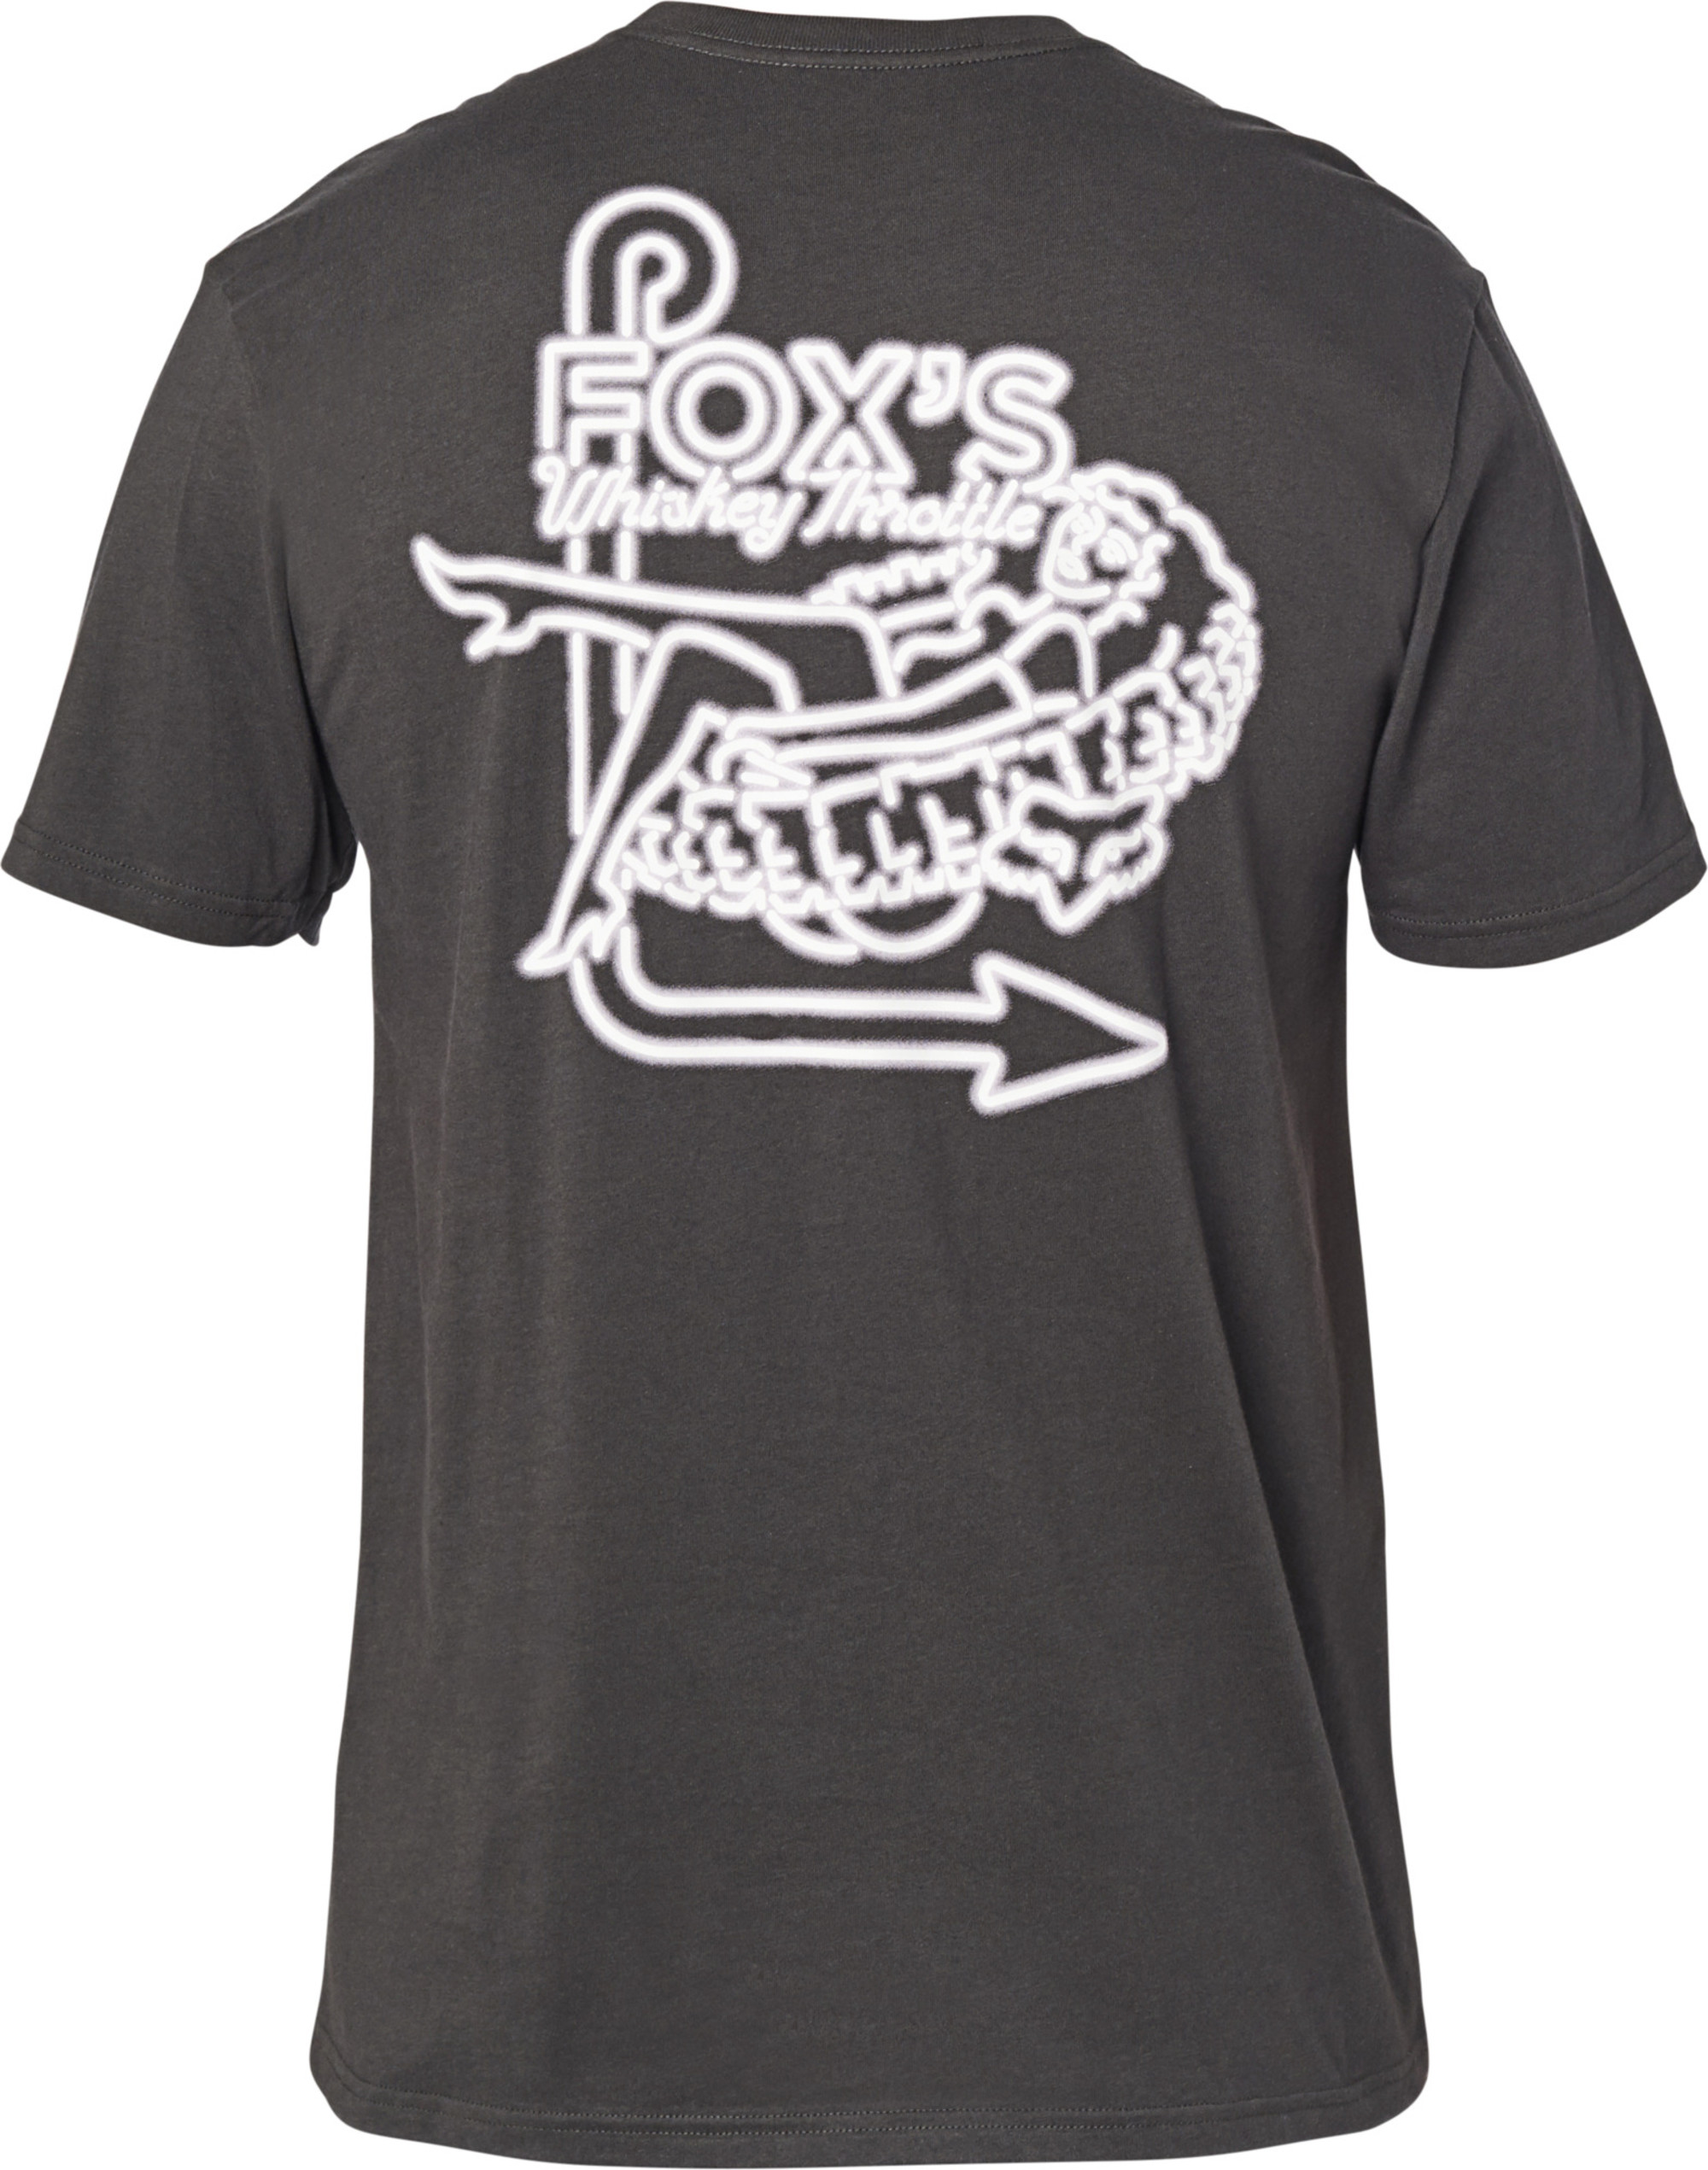 fox racing t-shirt shirts for men whiskey throttle premium